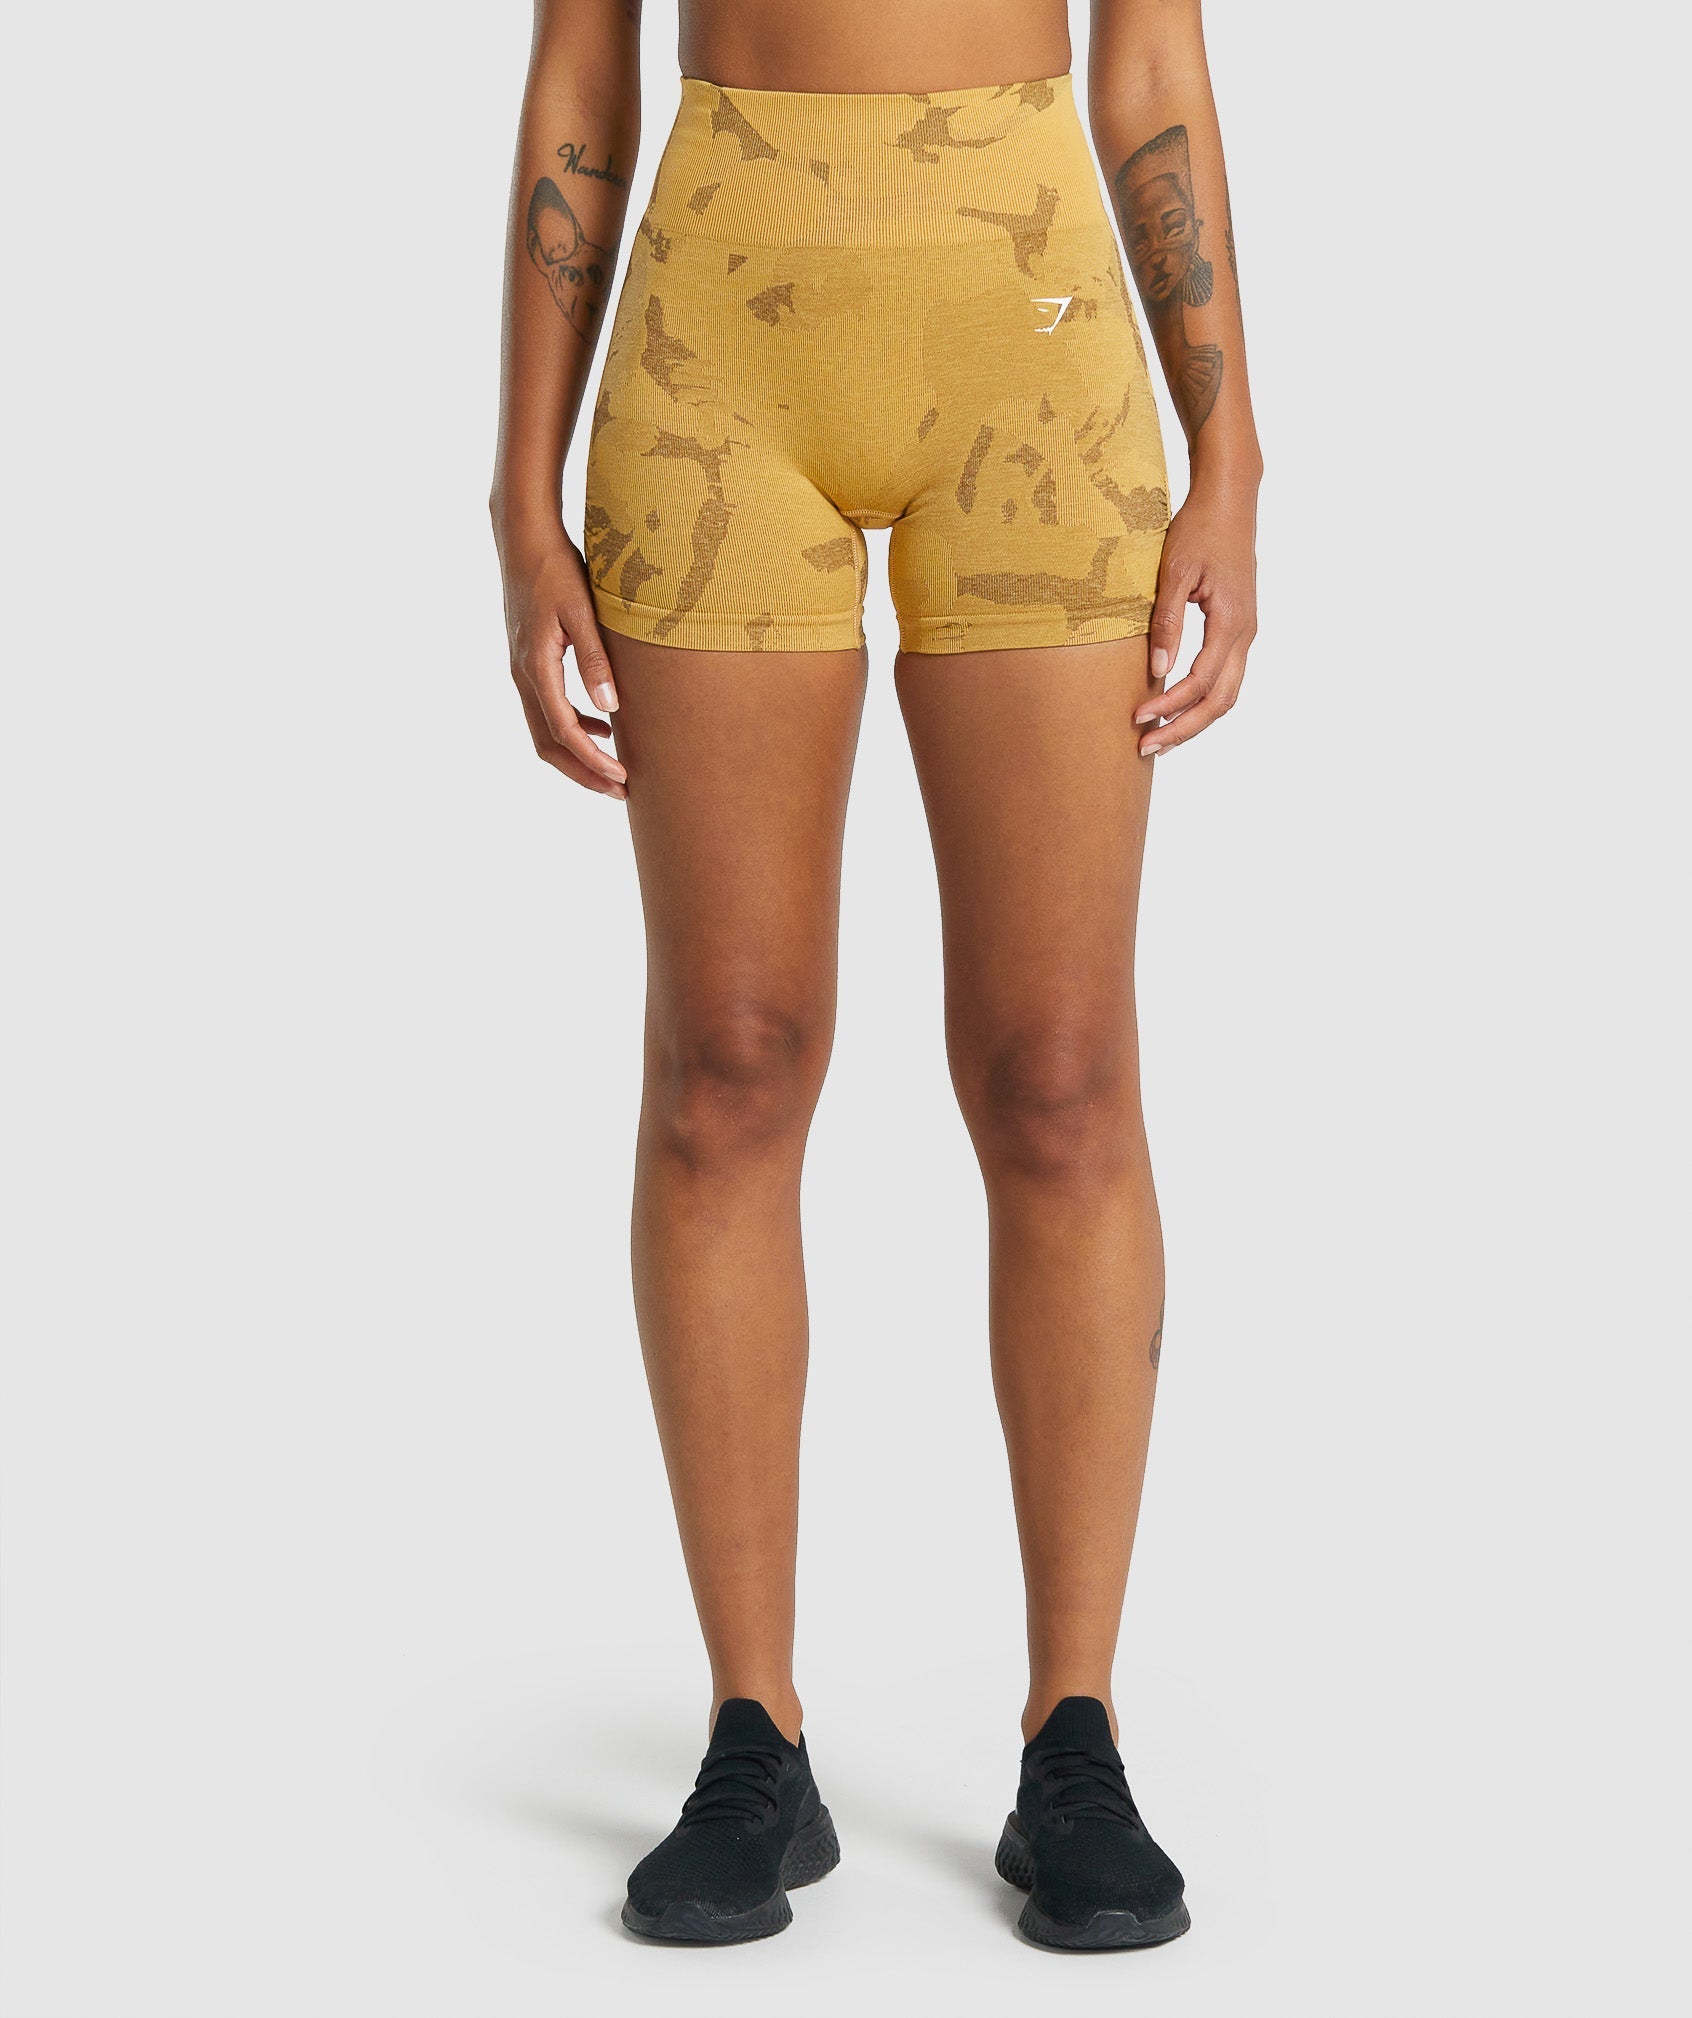 Gymshark Yellow Vital Seamless Shorts 2.0 Size M - $25 - From clarissa